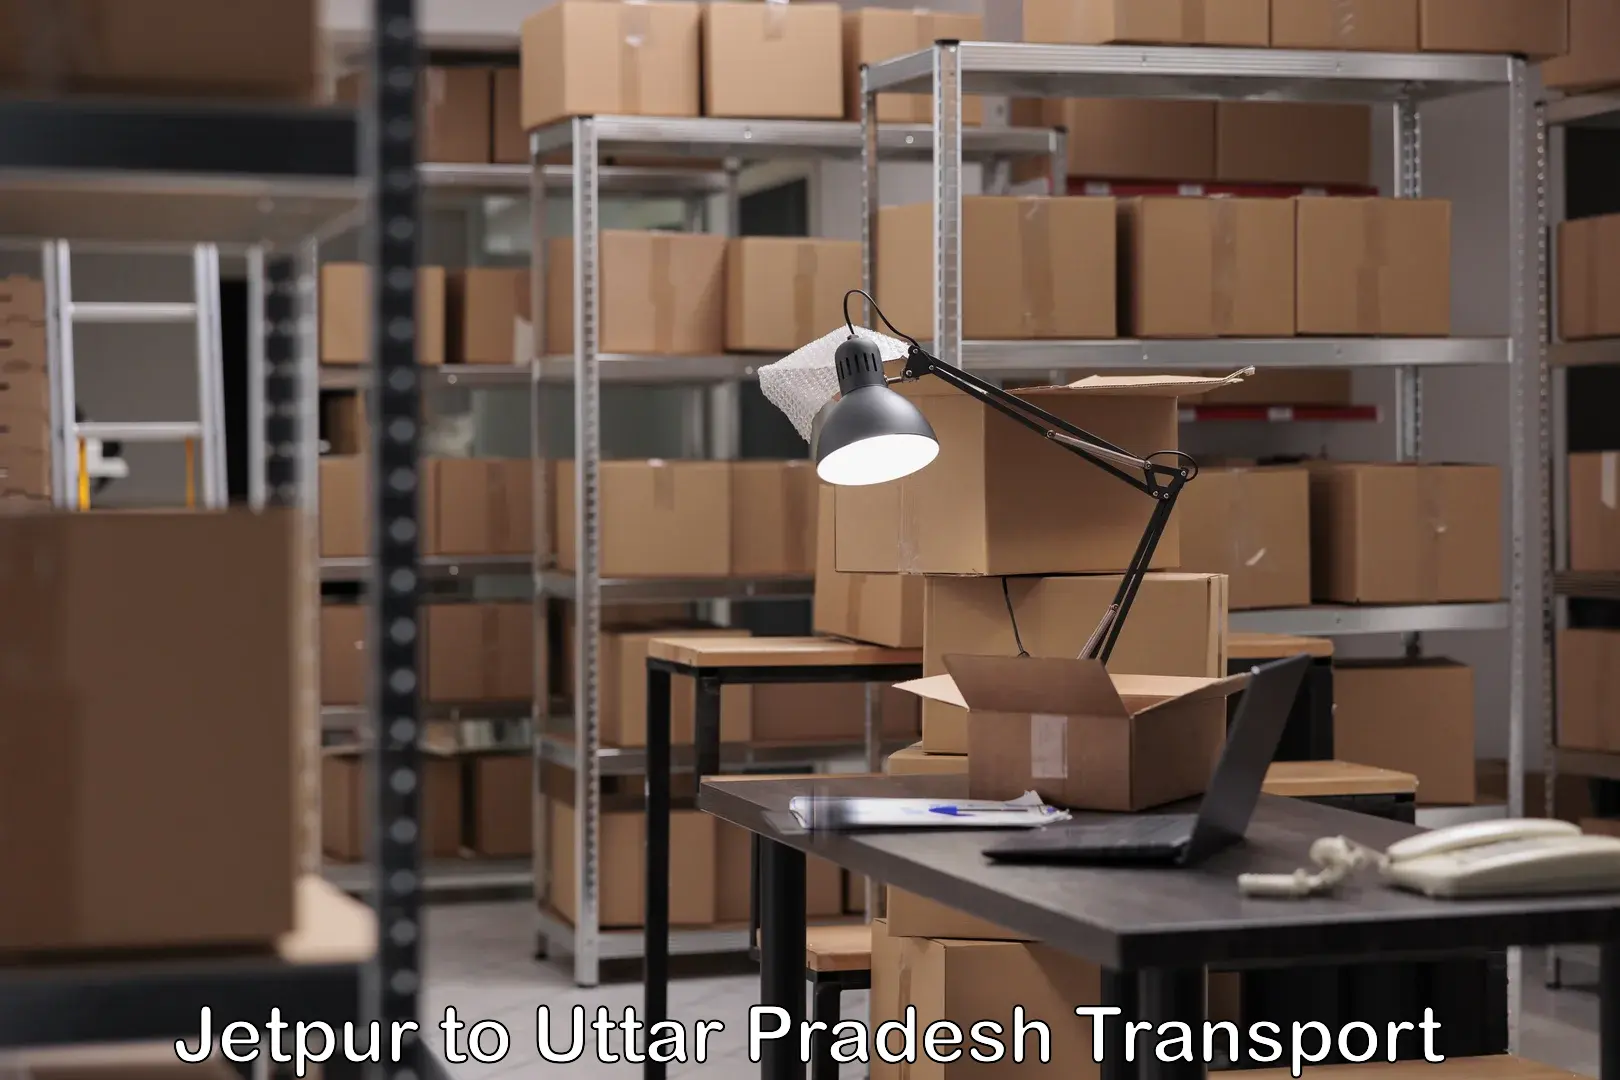 Truck transport companies in India Jetpur to Uttar Pradesh